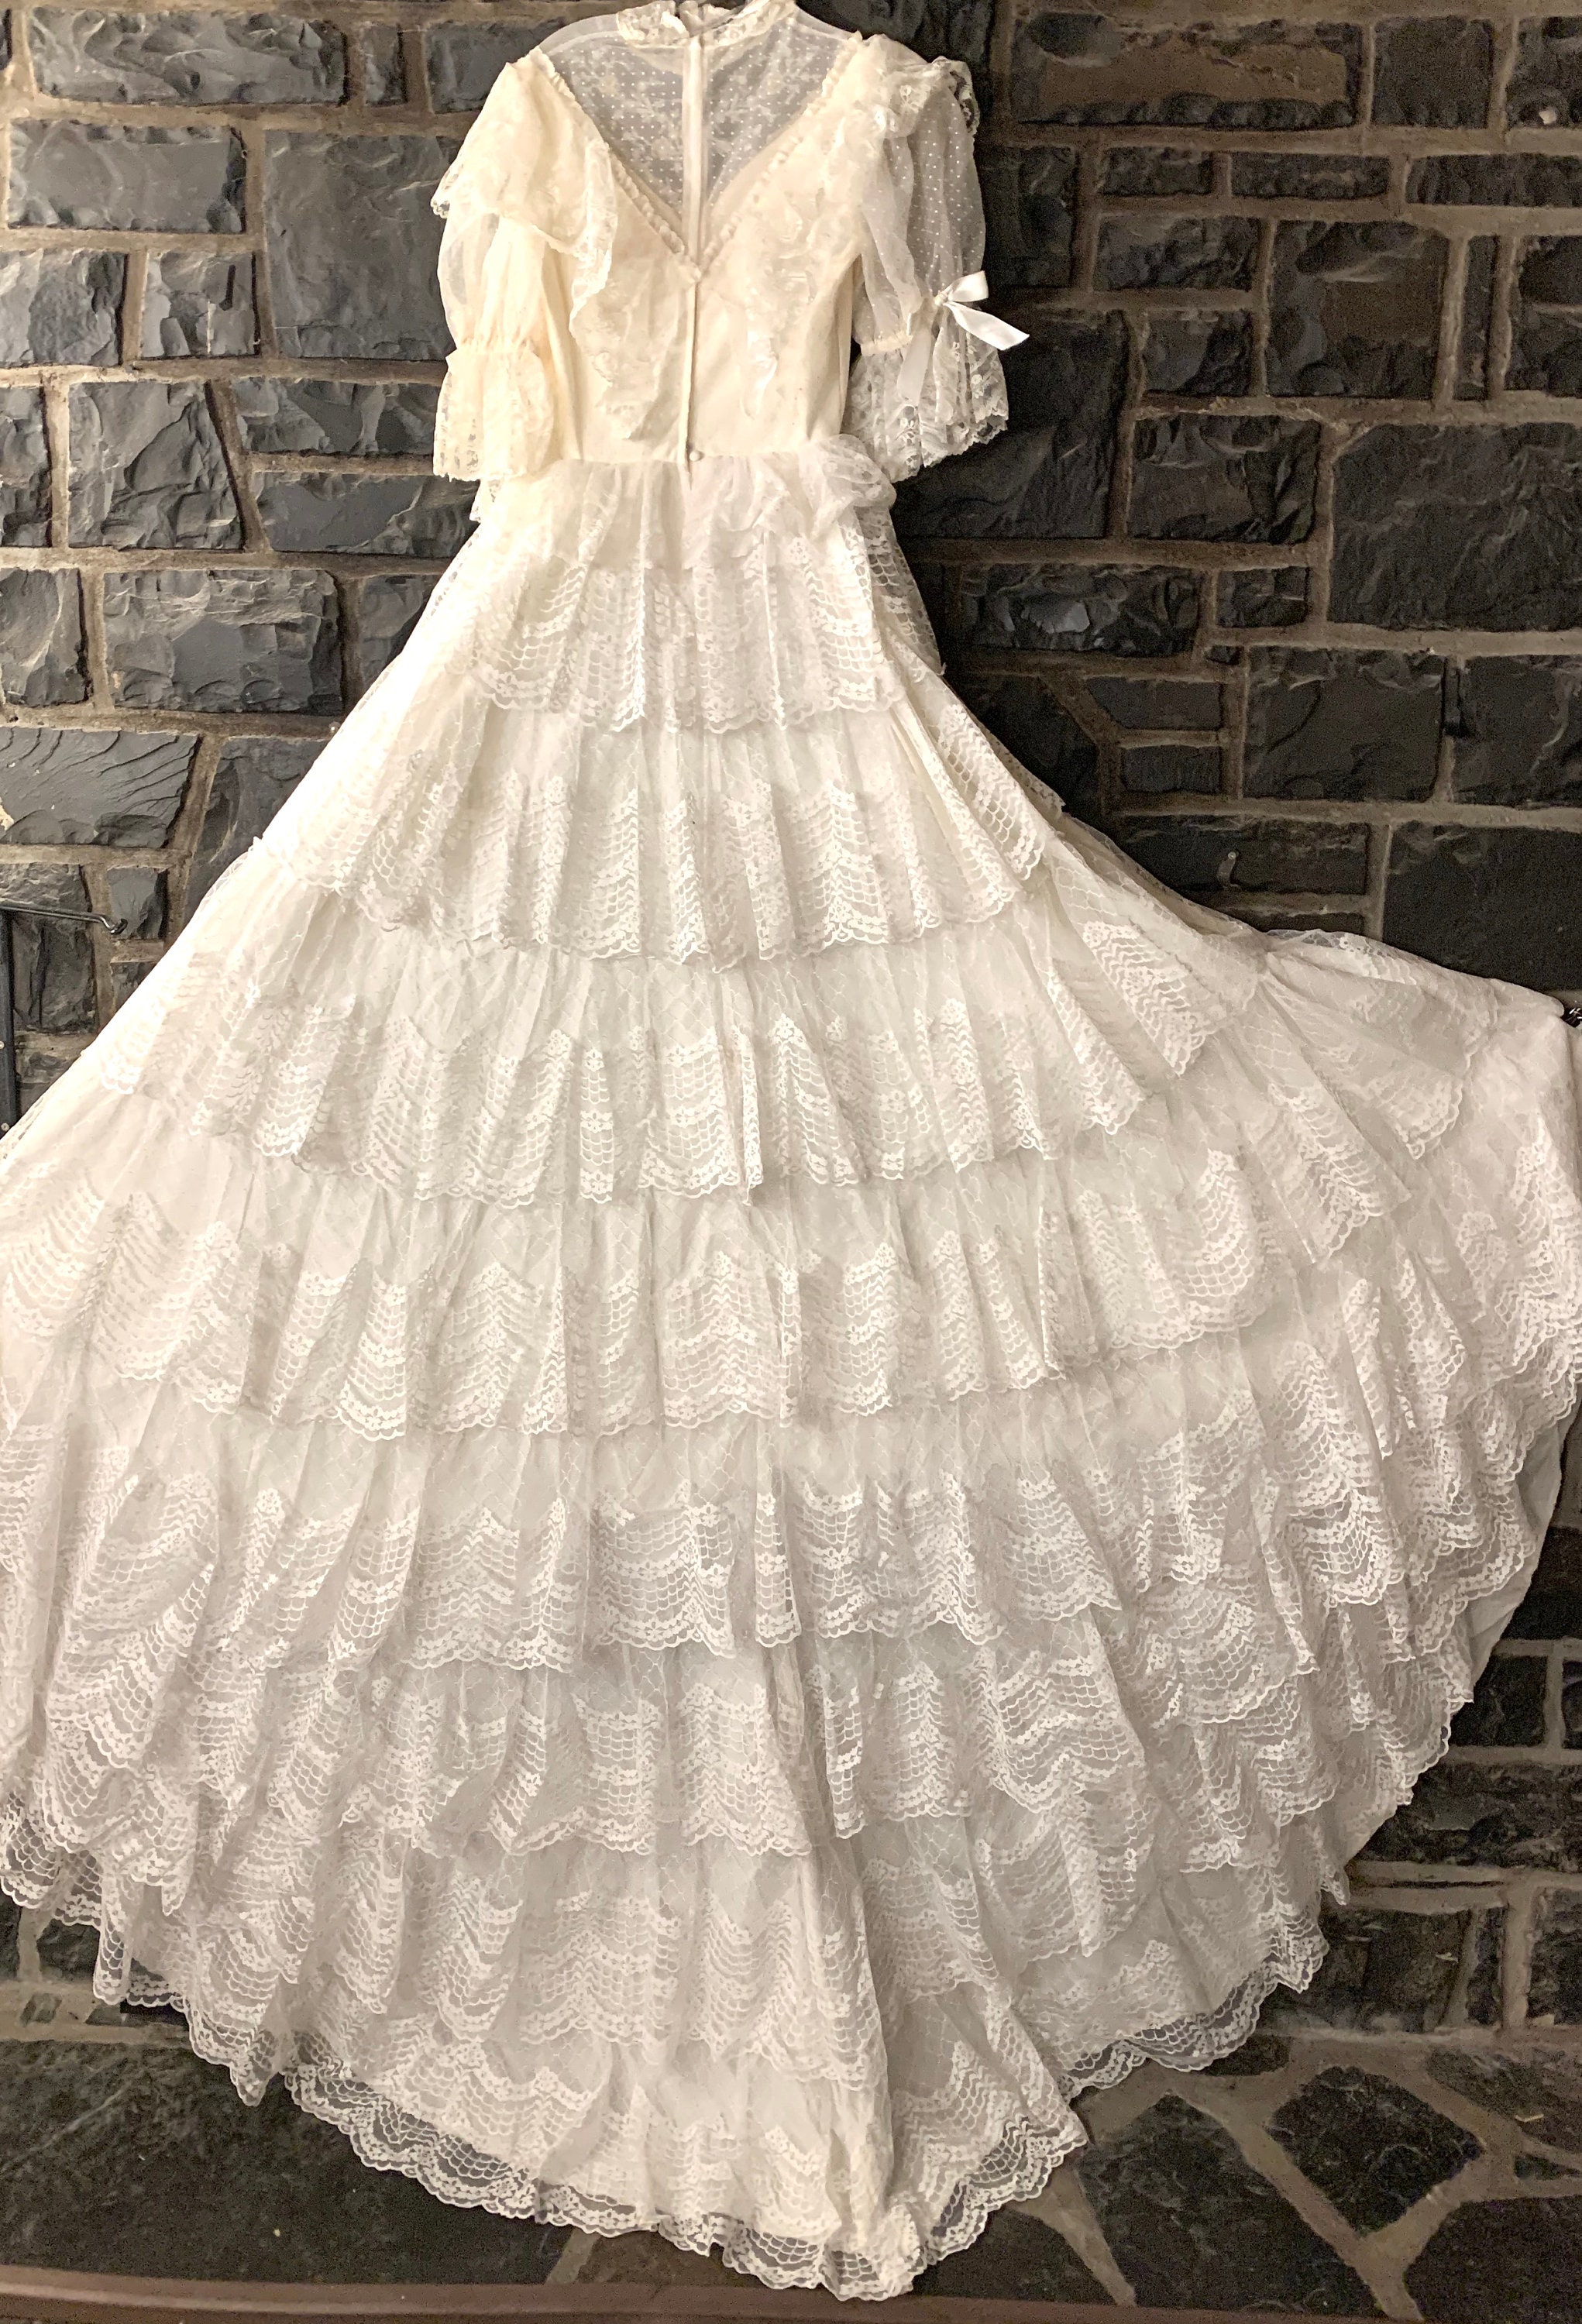 Tiered vintage bo peep style wedding dress costume | Etsy